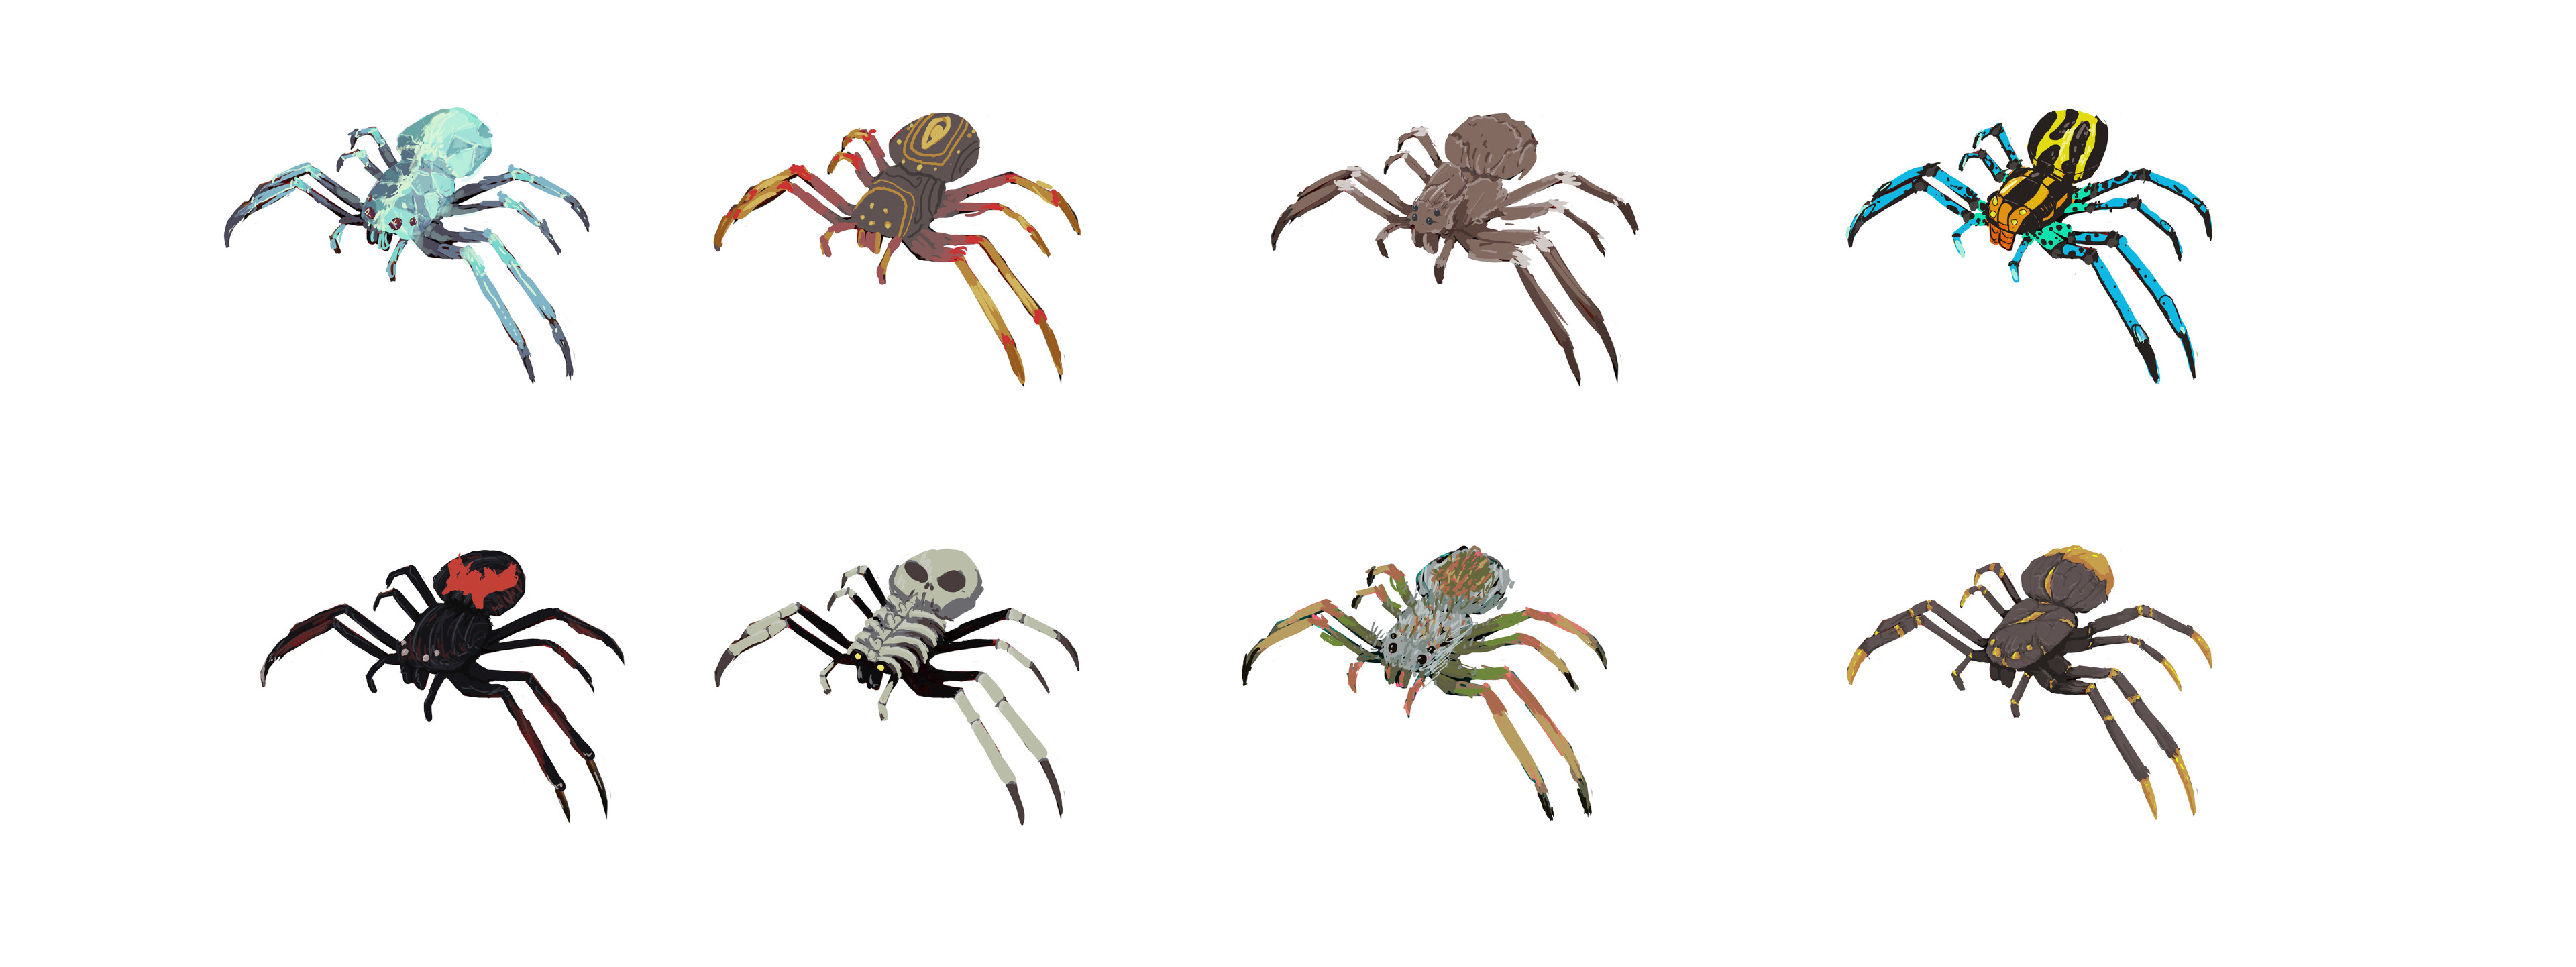 Spider Concepts